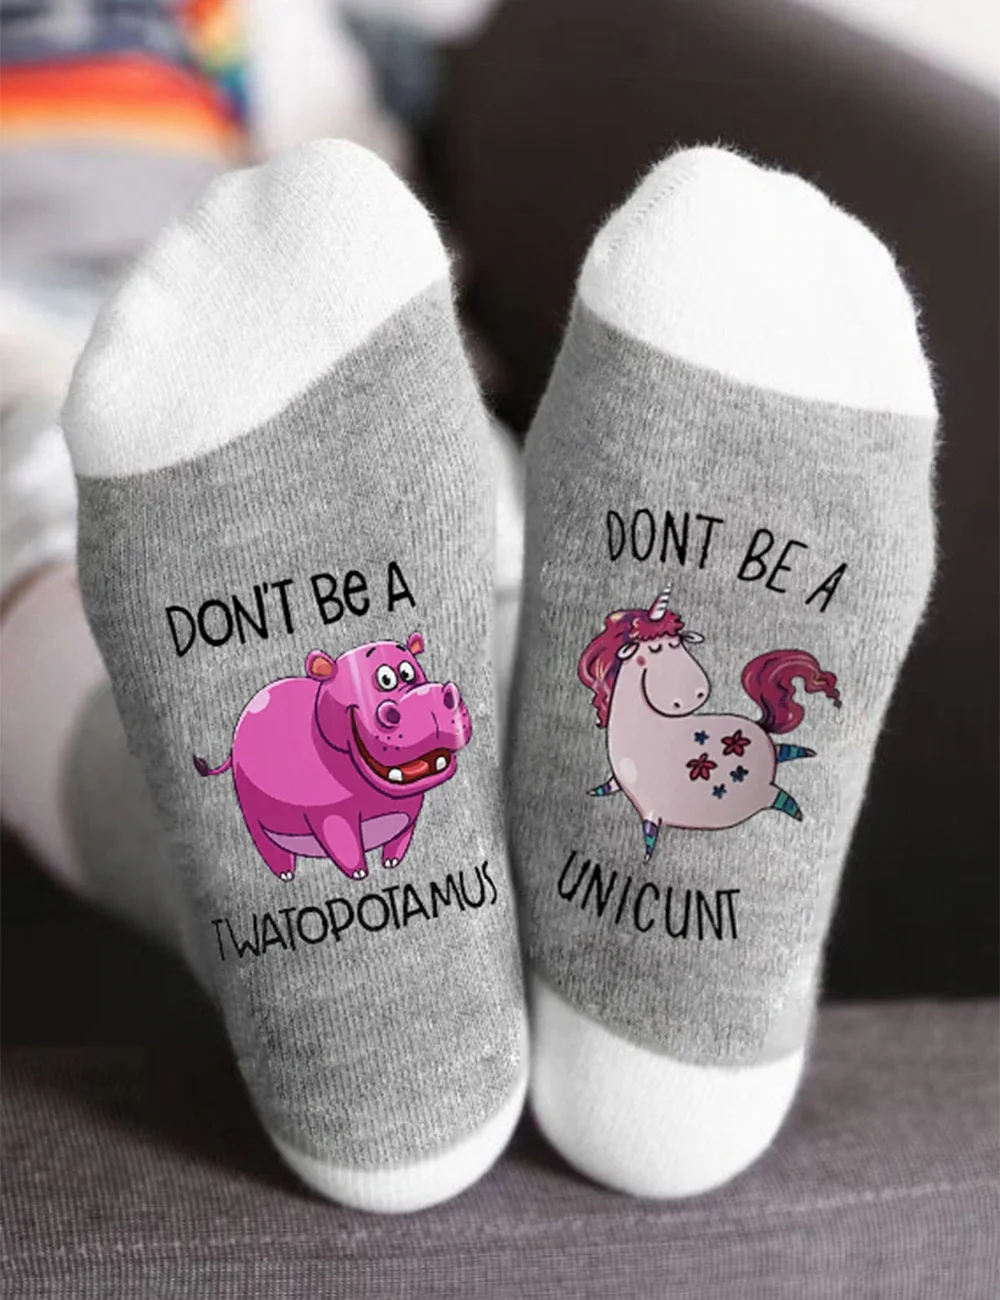 Don't Be A Twatopotamus Unicunt Socks